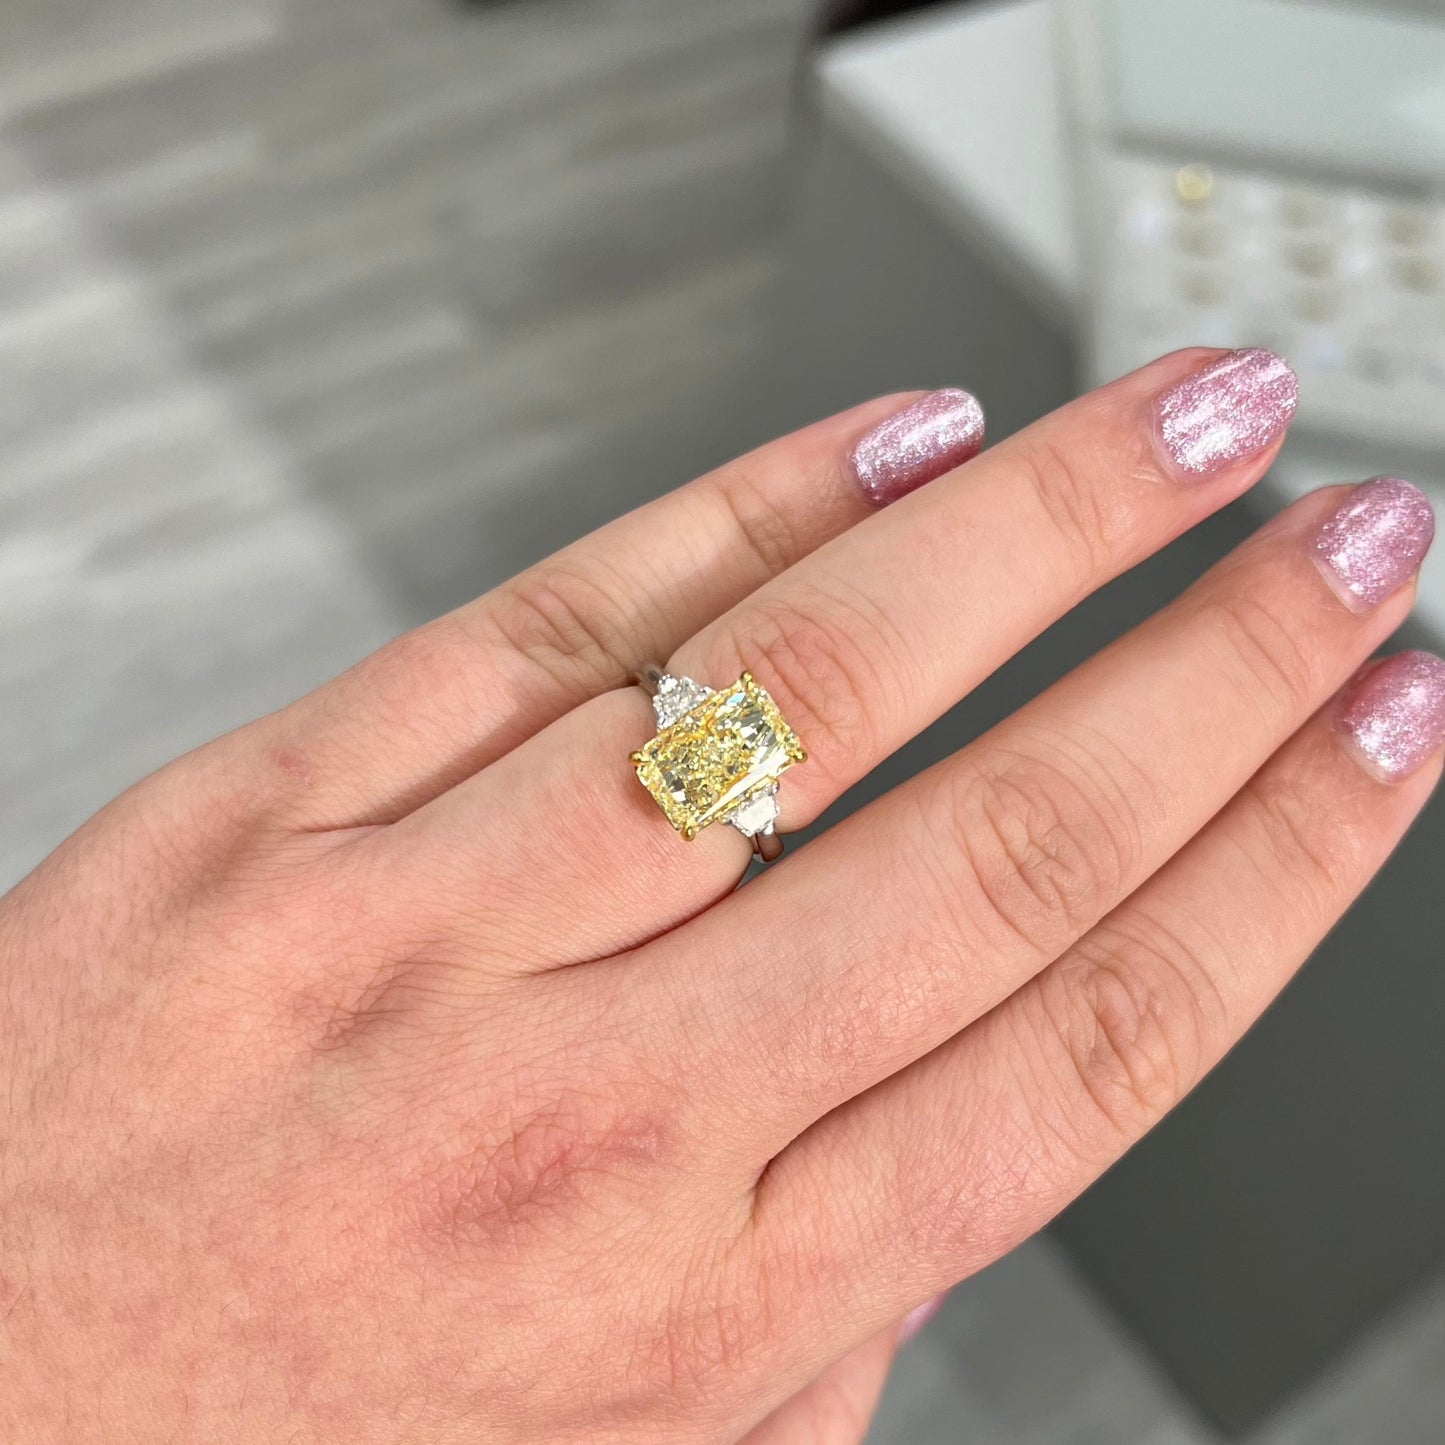 4 carat fancy yellow diamond ring. Gia certified fancy yellow diamond. Radiant cut yellow diamond. Yellow diamond engagement ring. Yellow diamond 3-stone ring. Canary diamond ring.